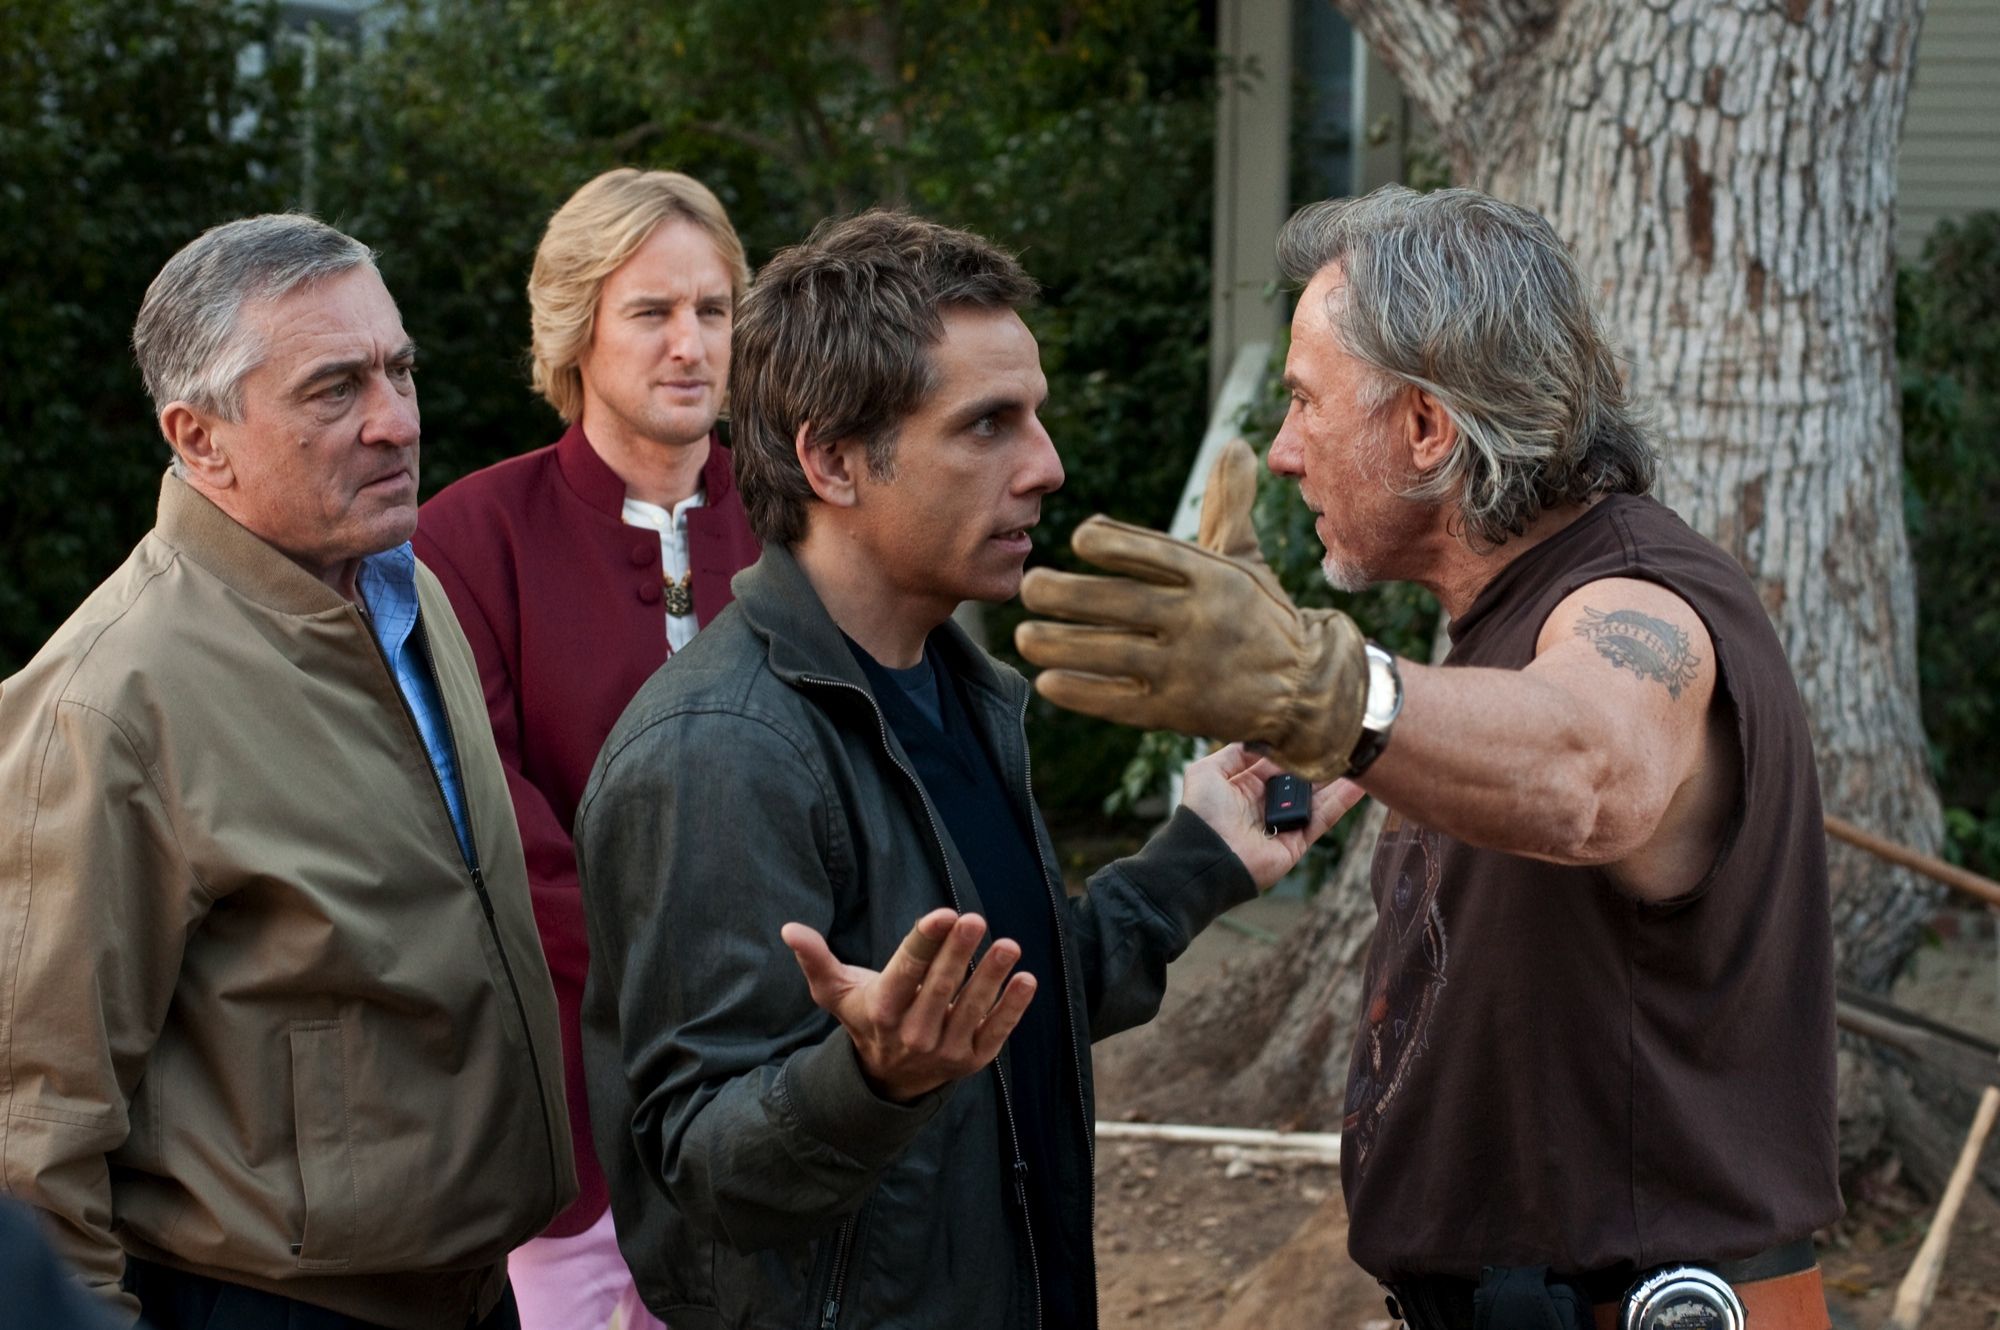 Robert De Niro, Ben Stiller and Owen Wilson in Little Fockers